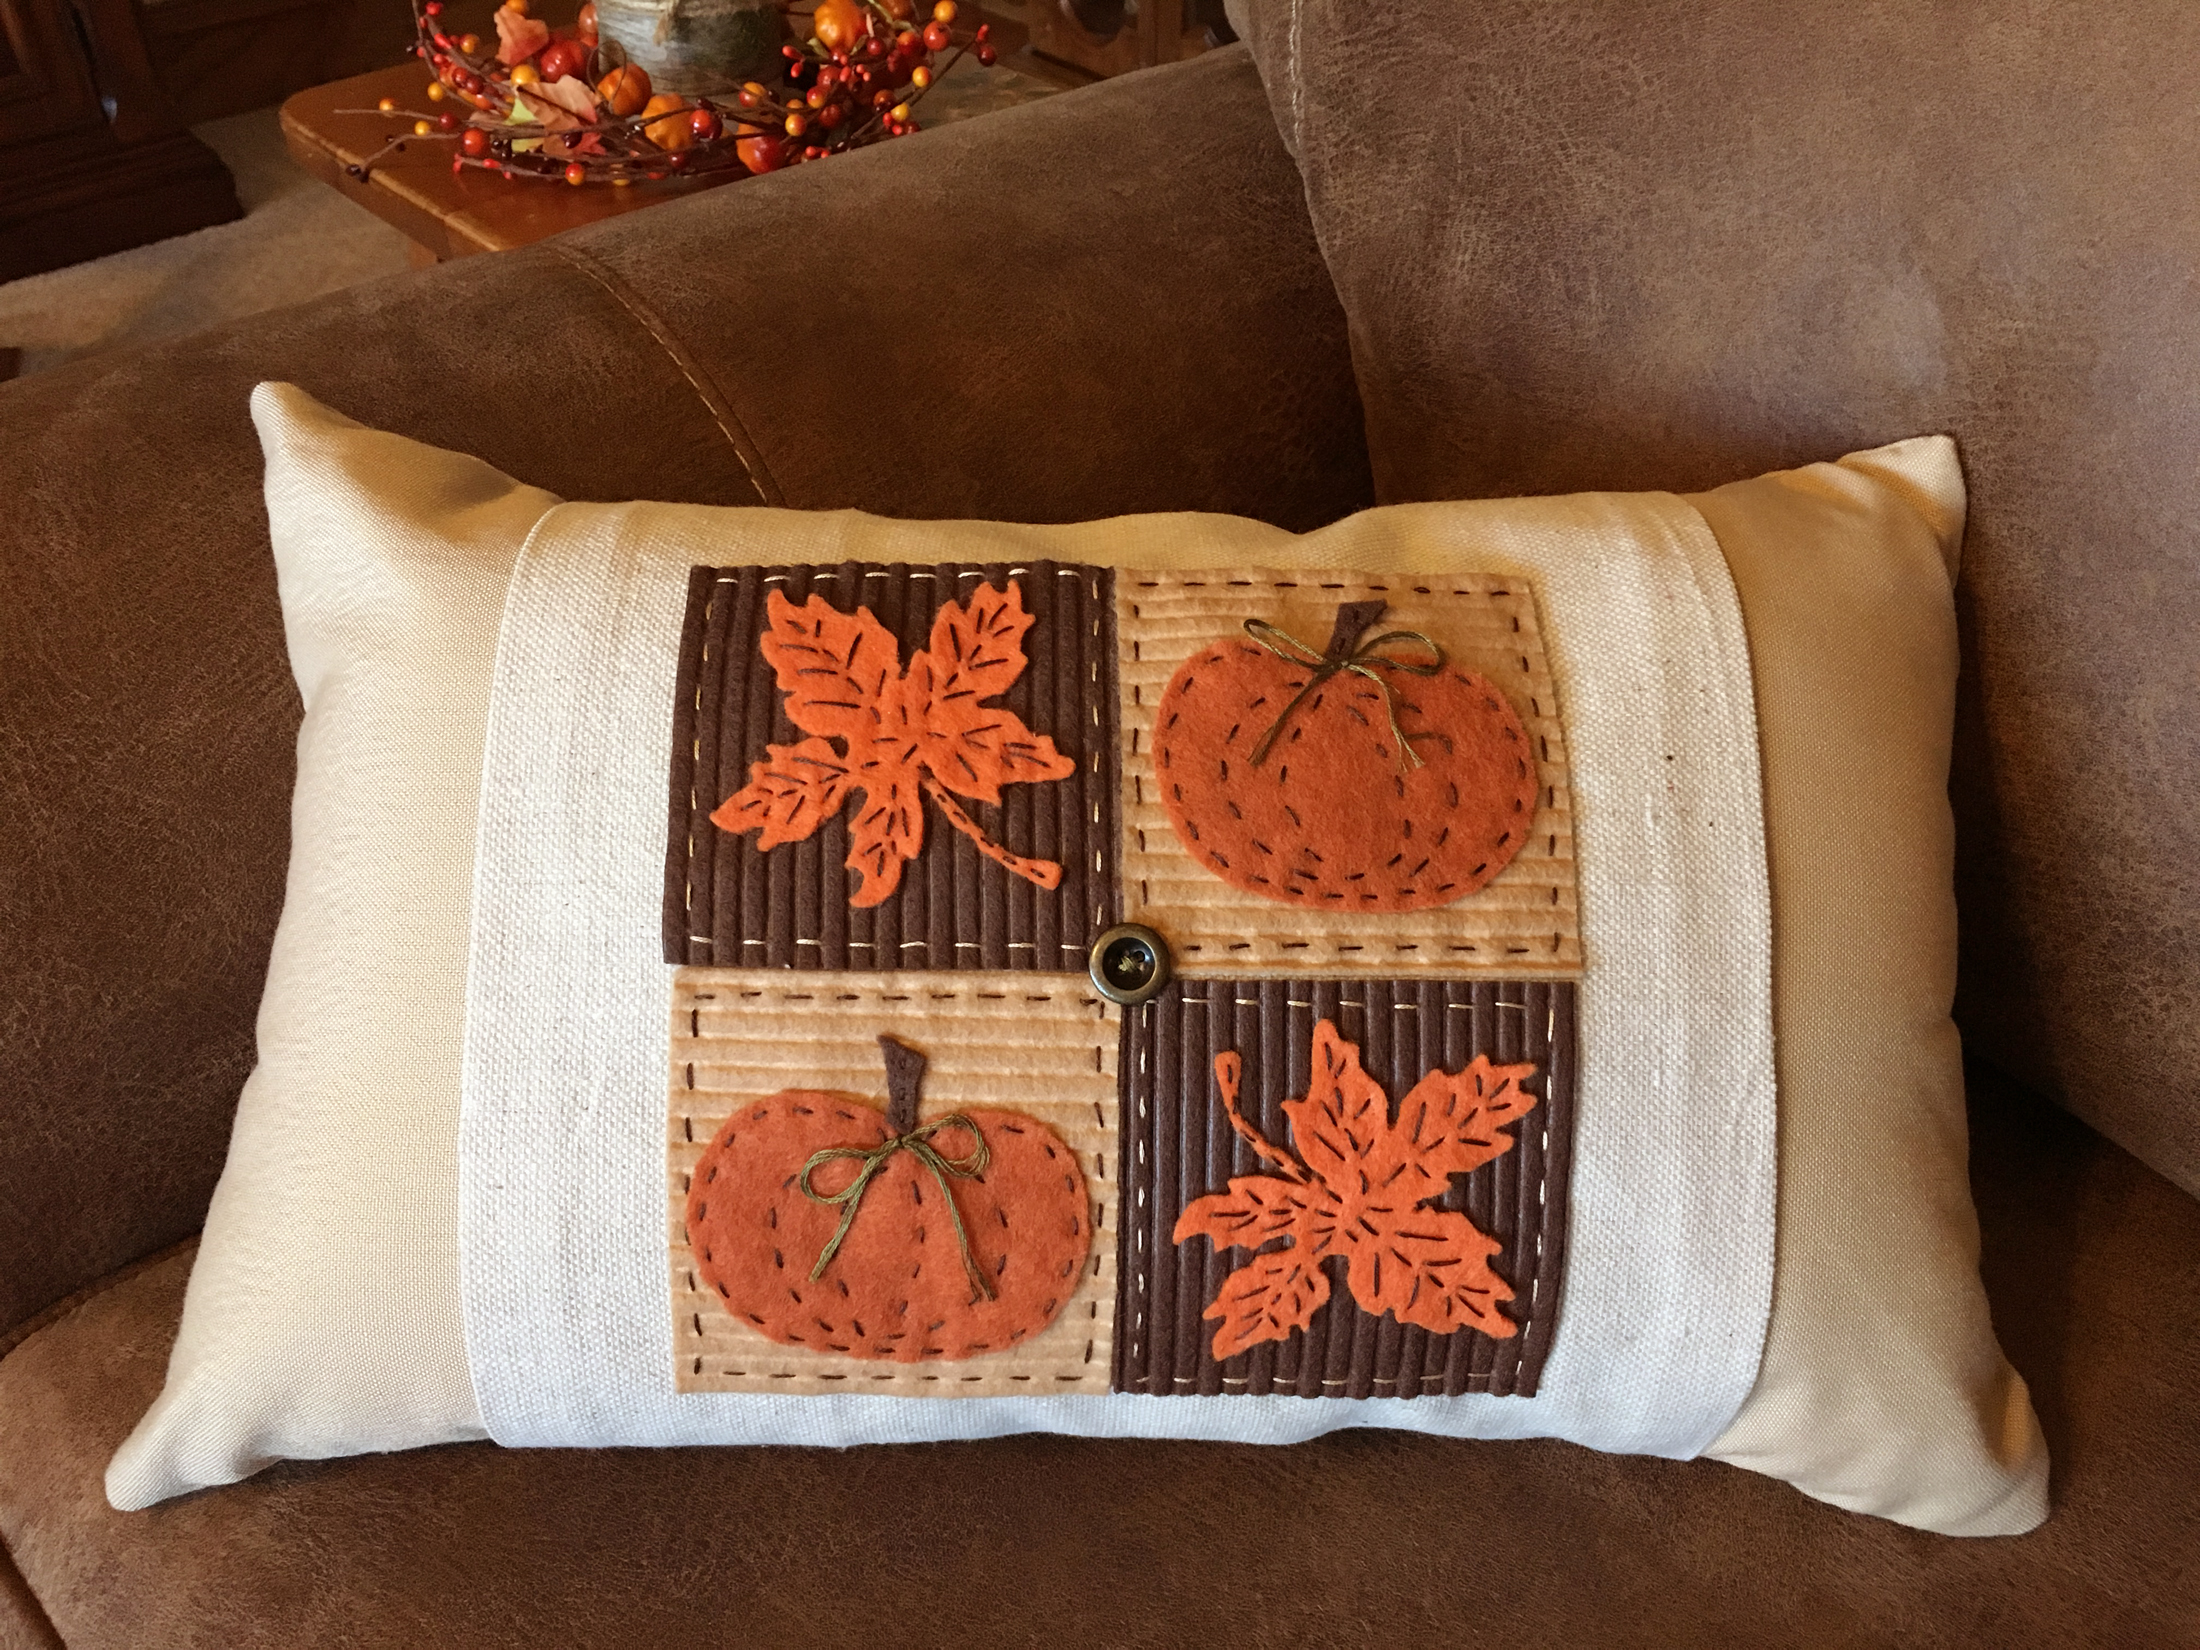 completed cross stitch finished pin cushion Autumn orange pumpkin orange pillow